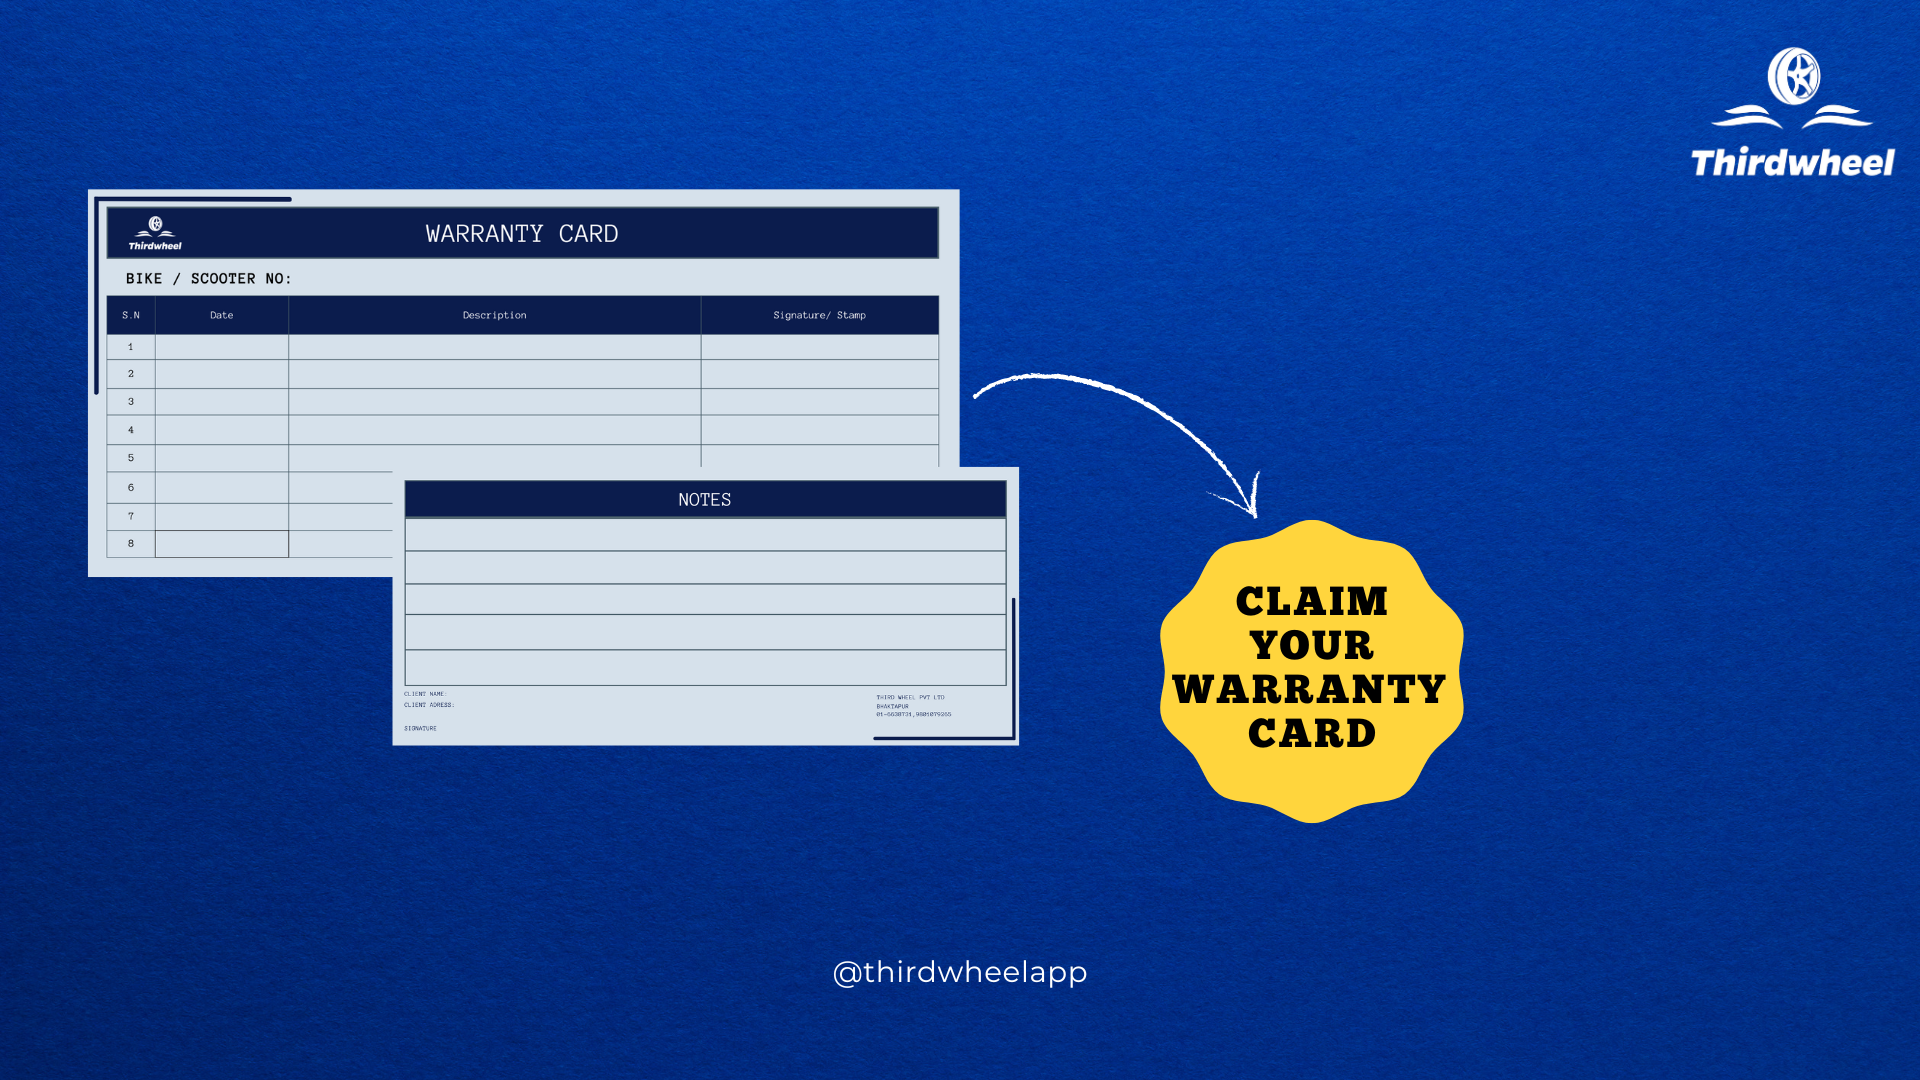 Important Notice - Warranty Card Claim